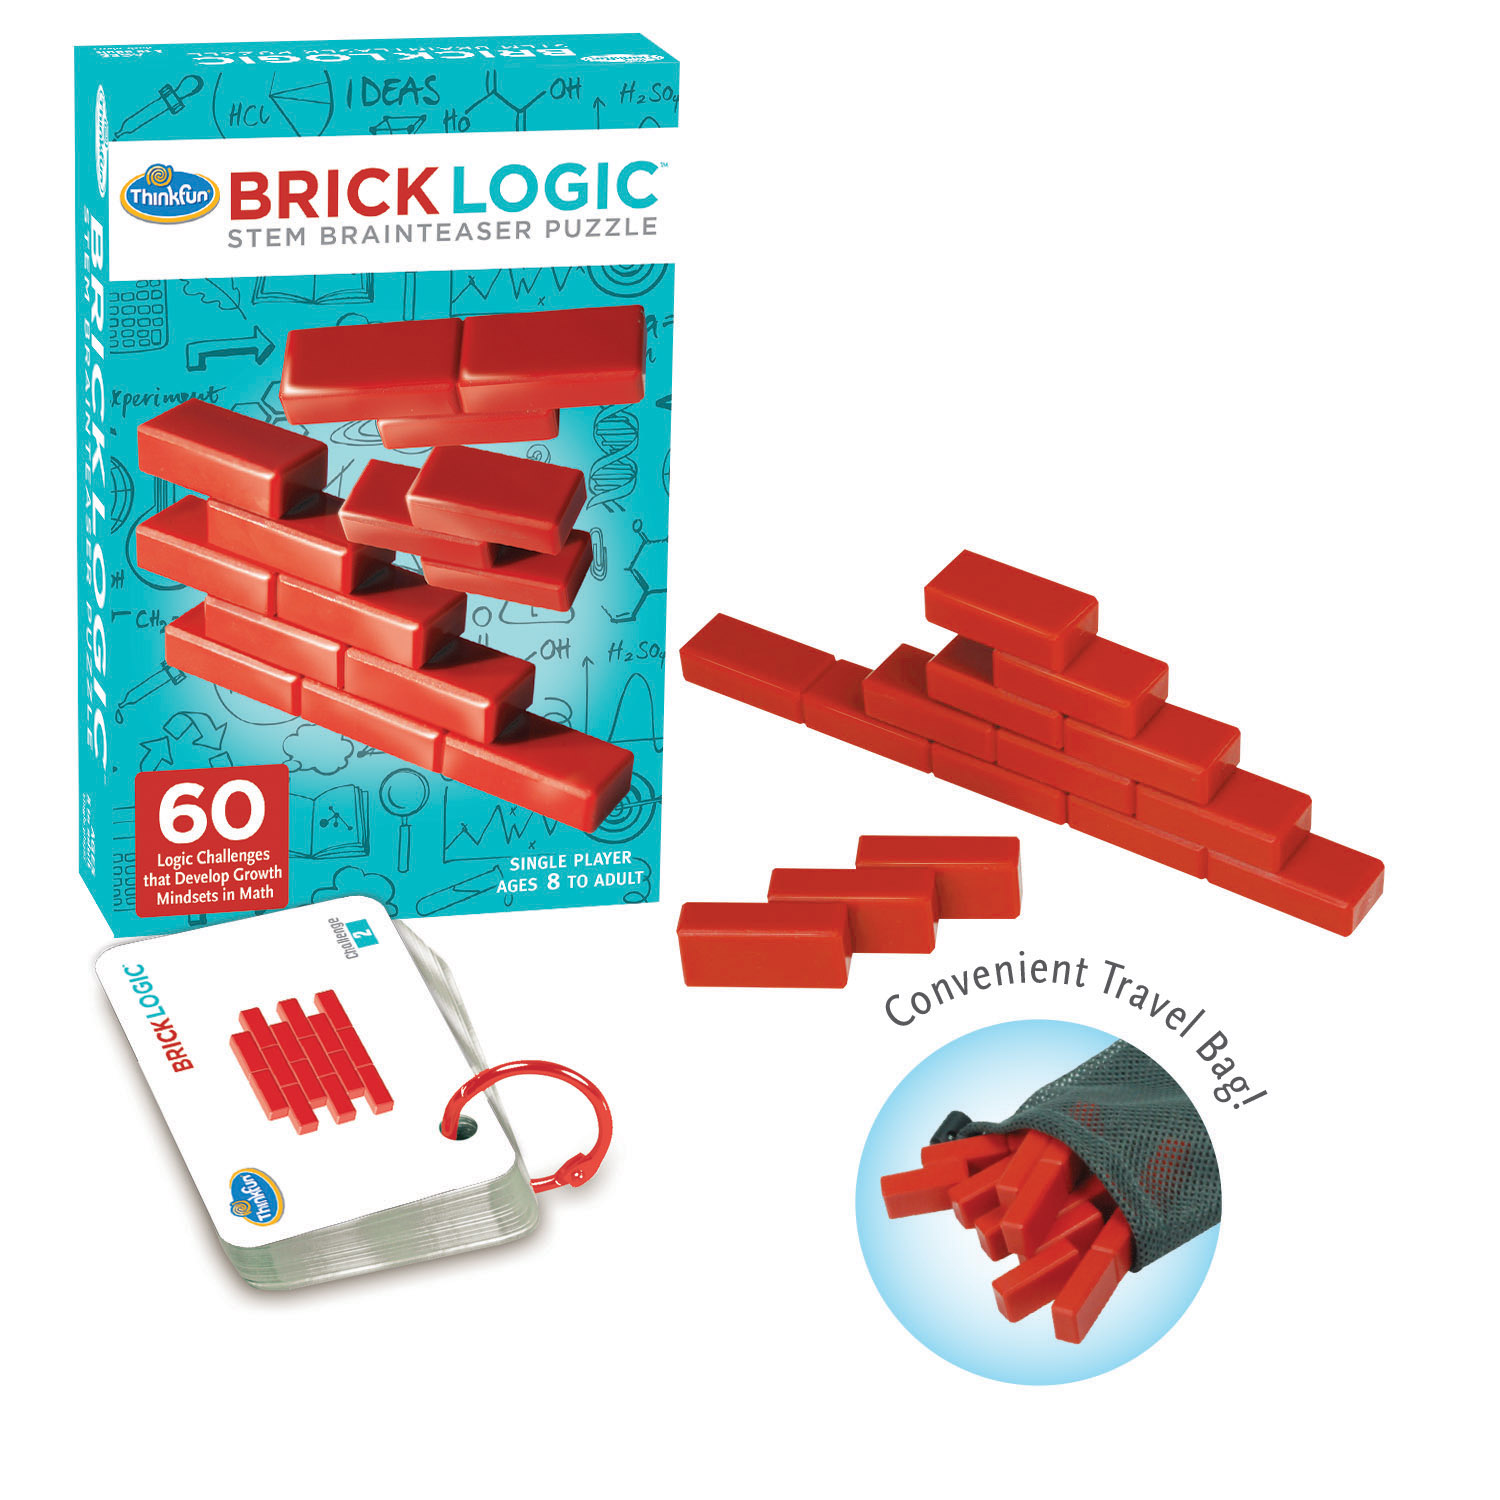 Настольная игра-головоломка ThinkFun — Кирпичики Brick by brick, 5901-RU 